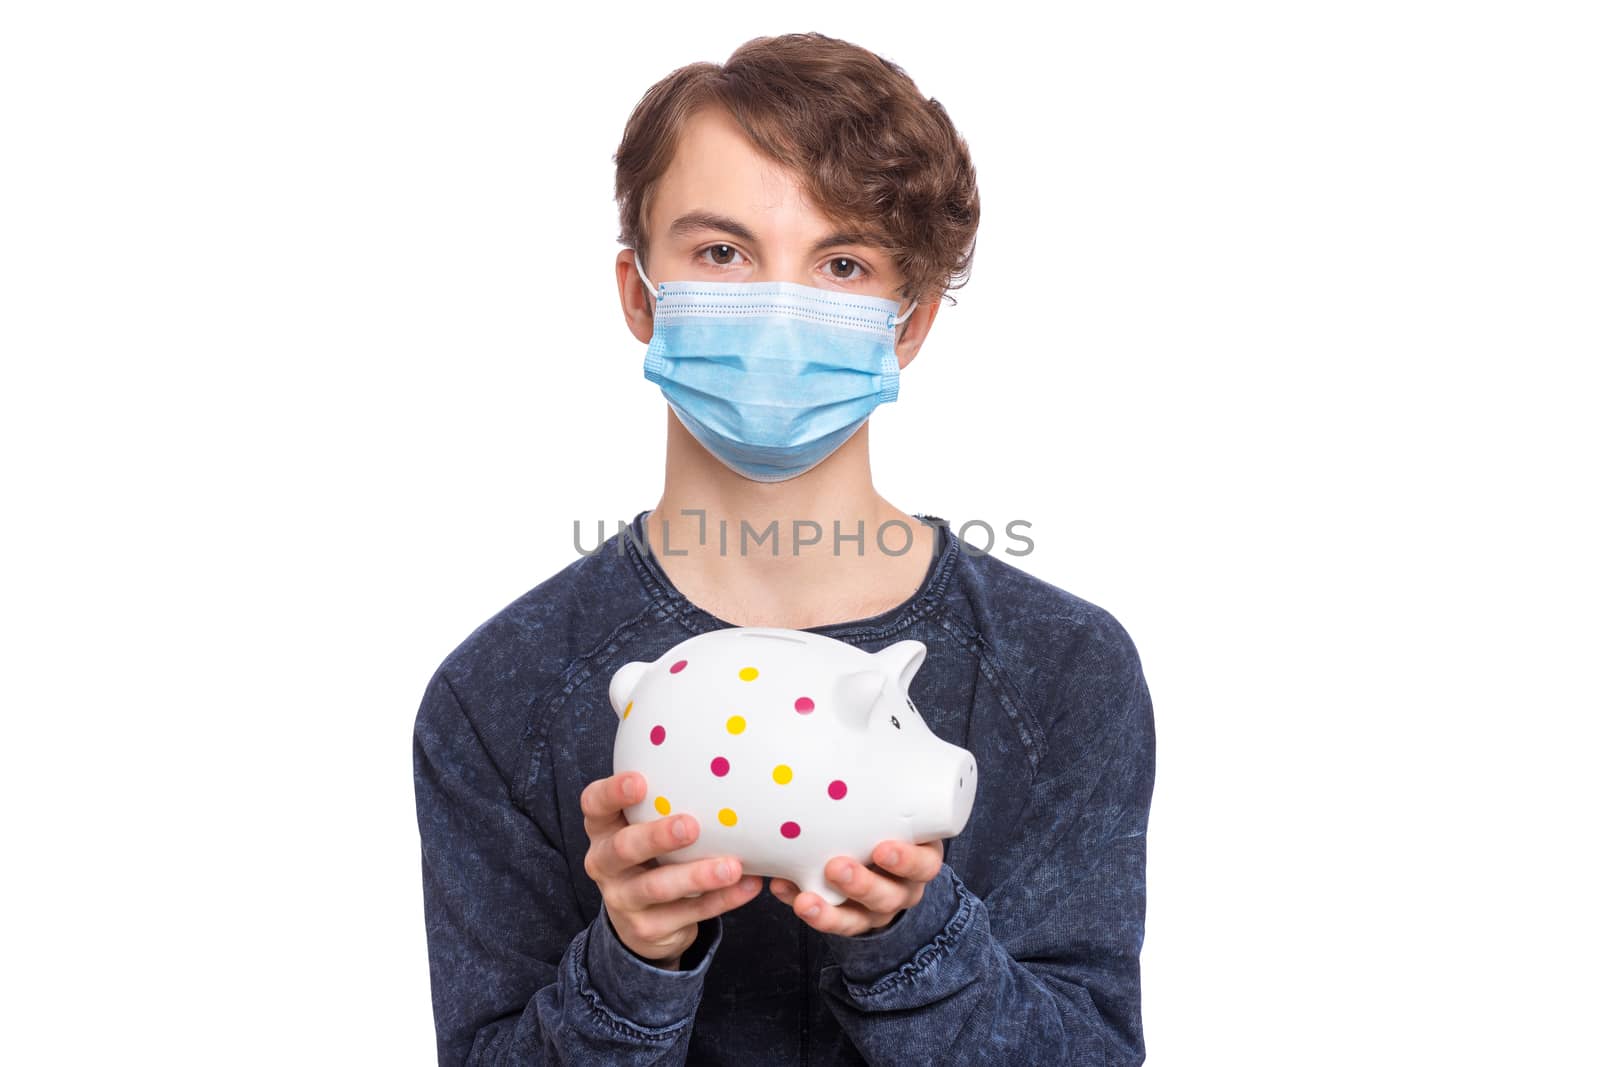 Concept of coronavirus quarantine. Portrait of teen boy wearing medical protective mask. Child holding Piggy Bank.